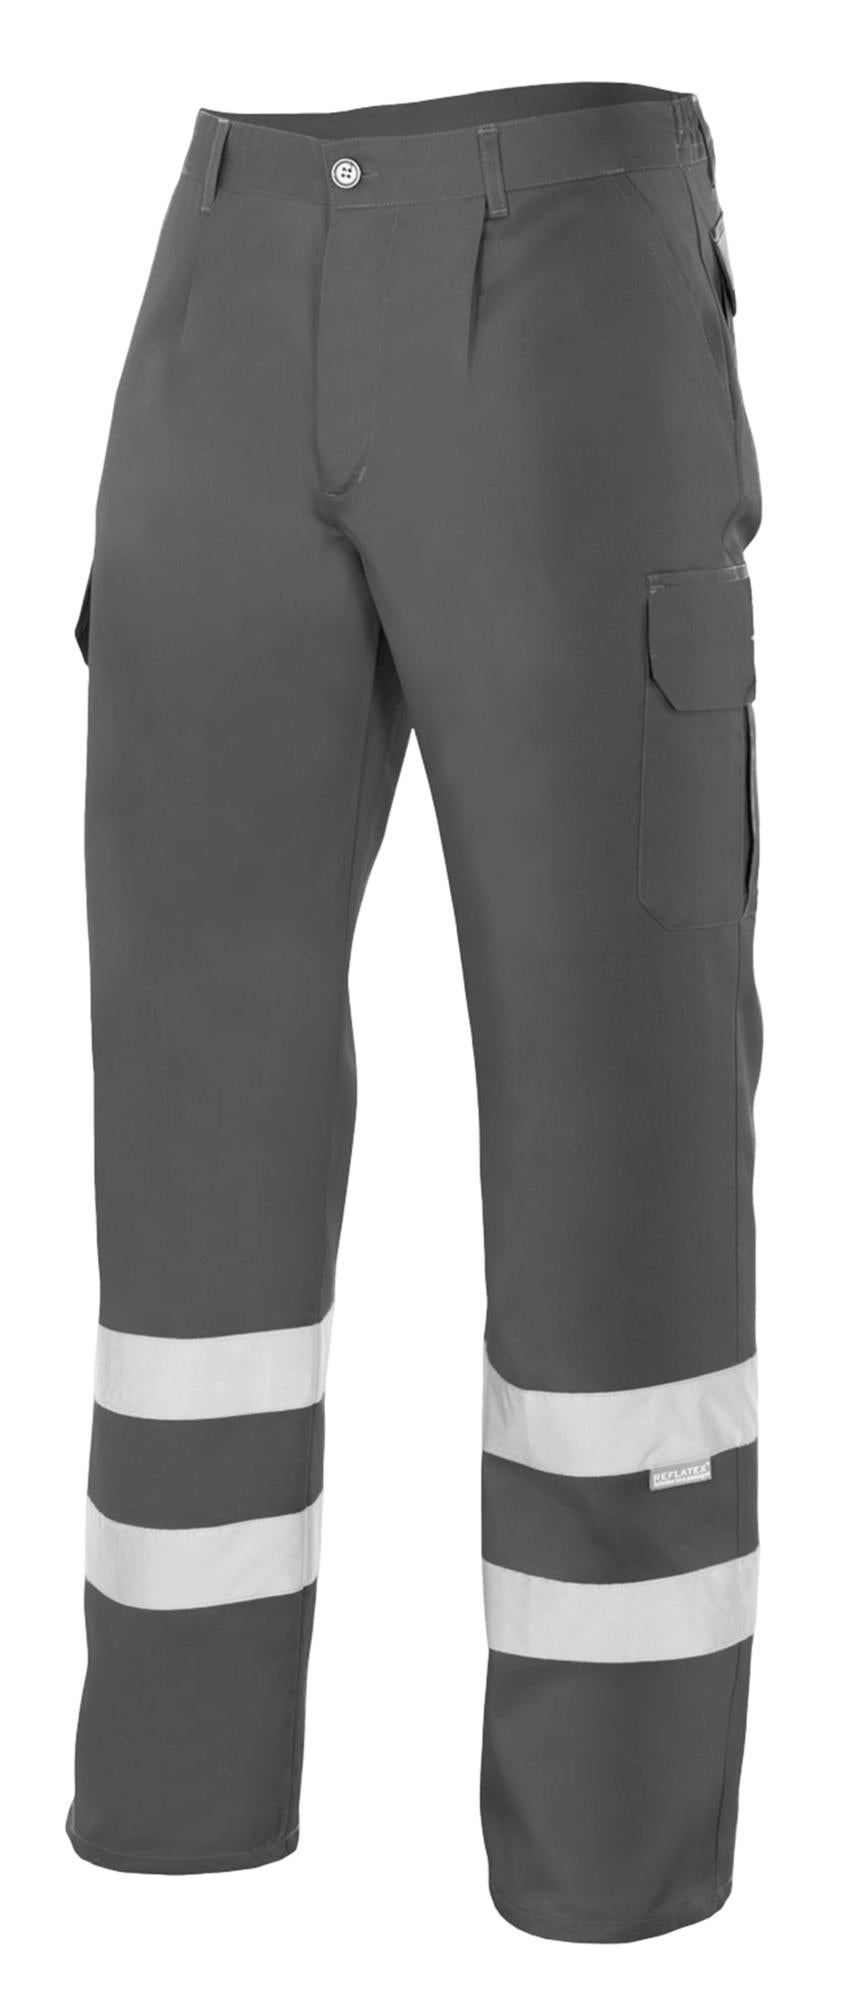 Pantalones Largos DeTrabajo, Multibolsillos, Resistentes, Rodilla  Reforzada, Gris/Amarillo Talla 46/48 L